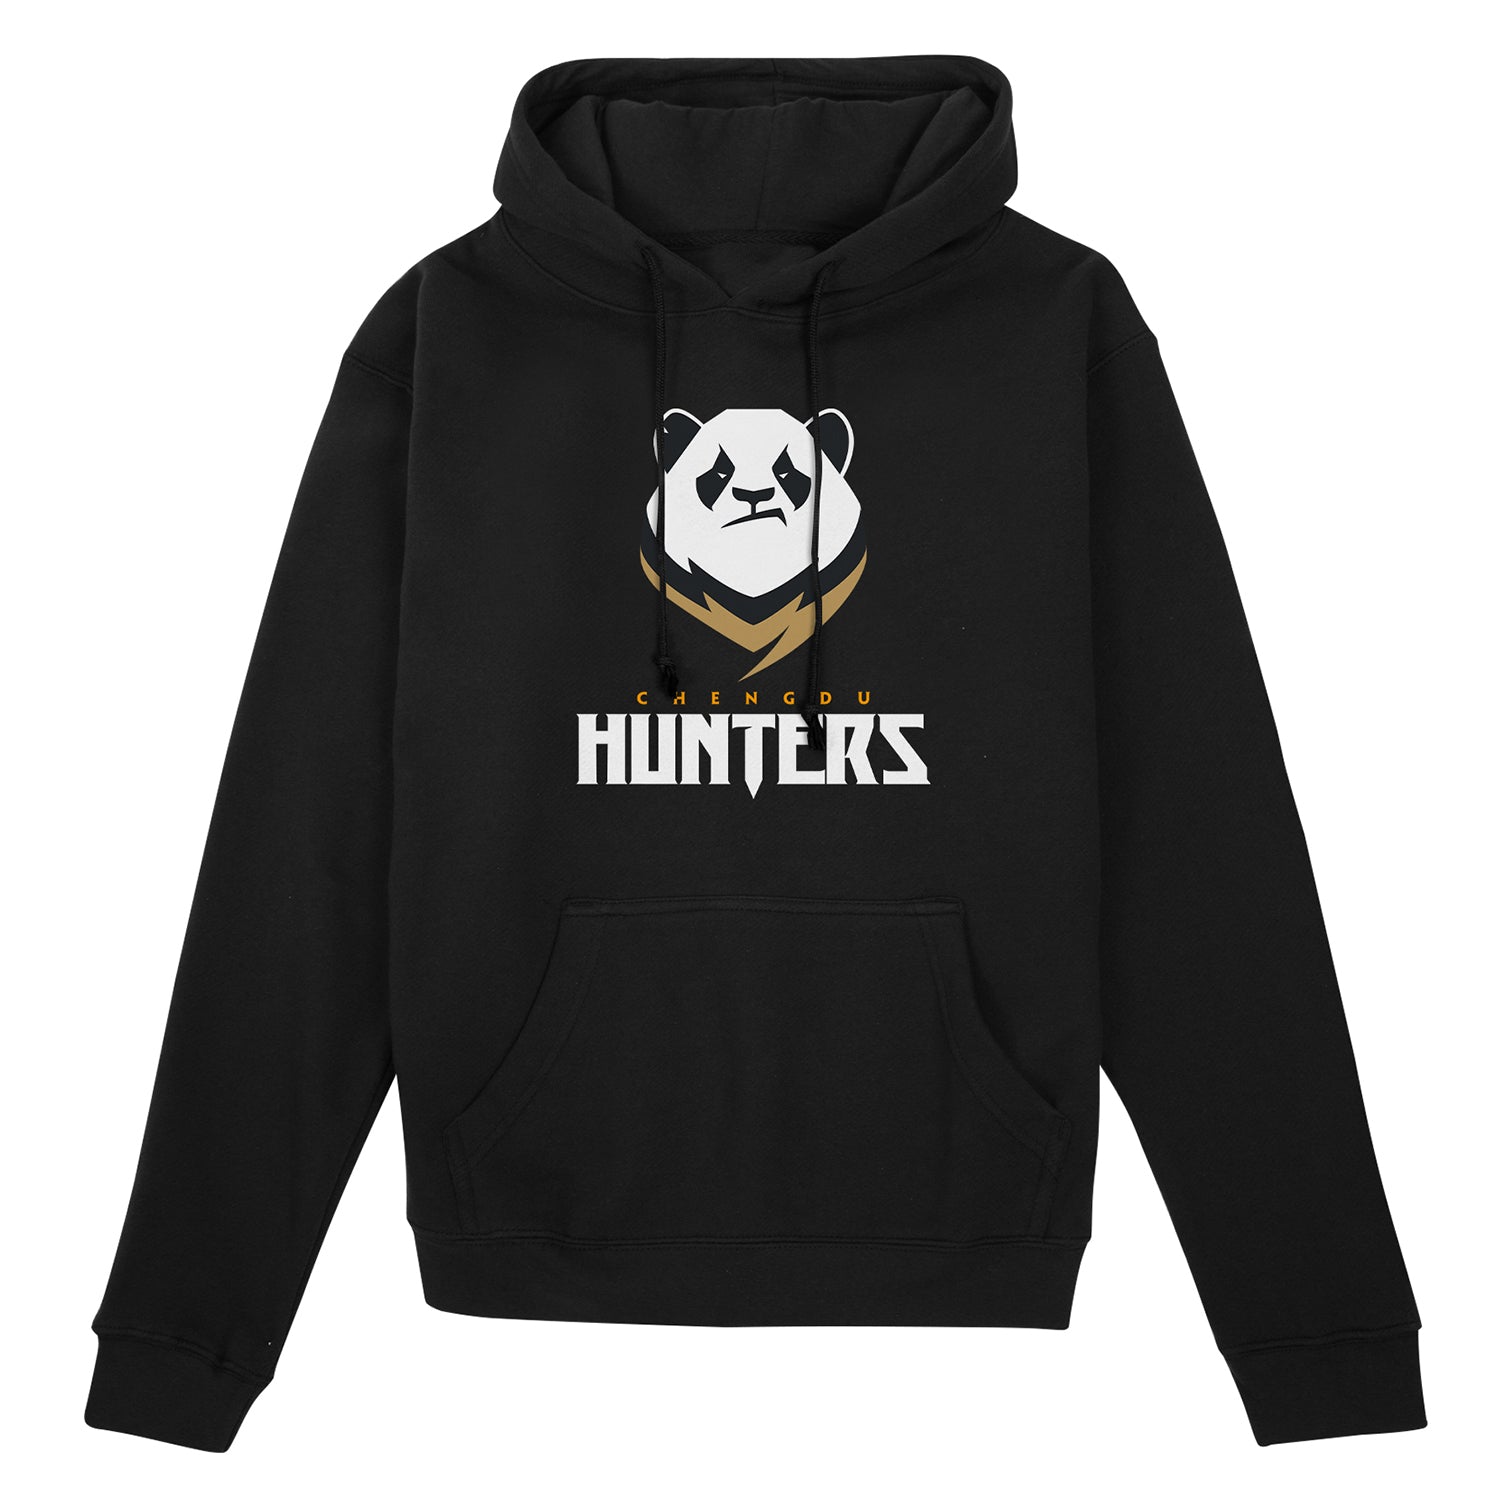 Chengdu Hunters Black Logo Hoodie - Front View